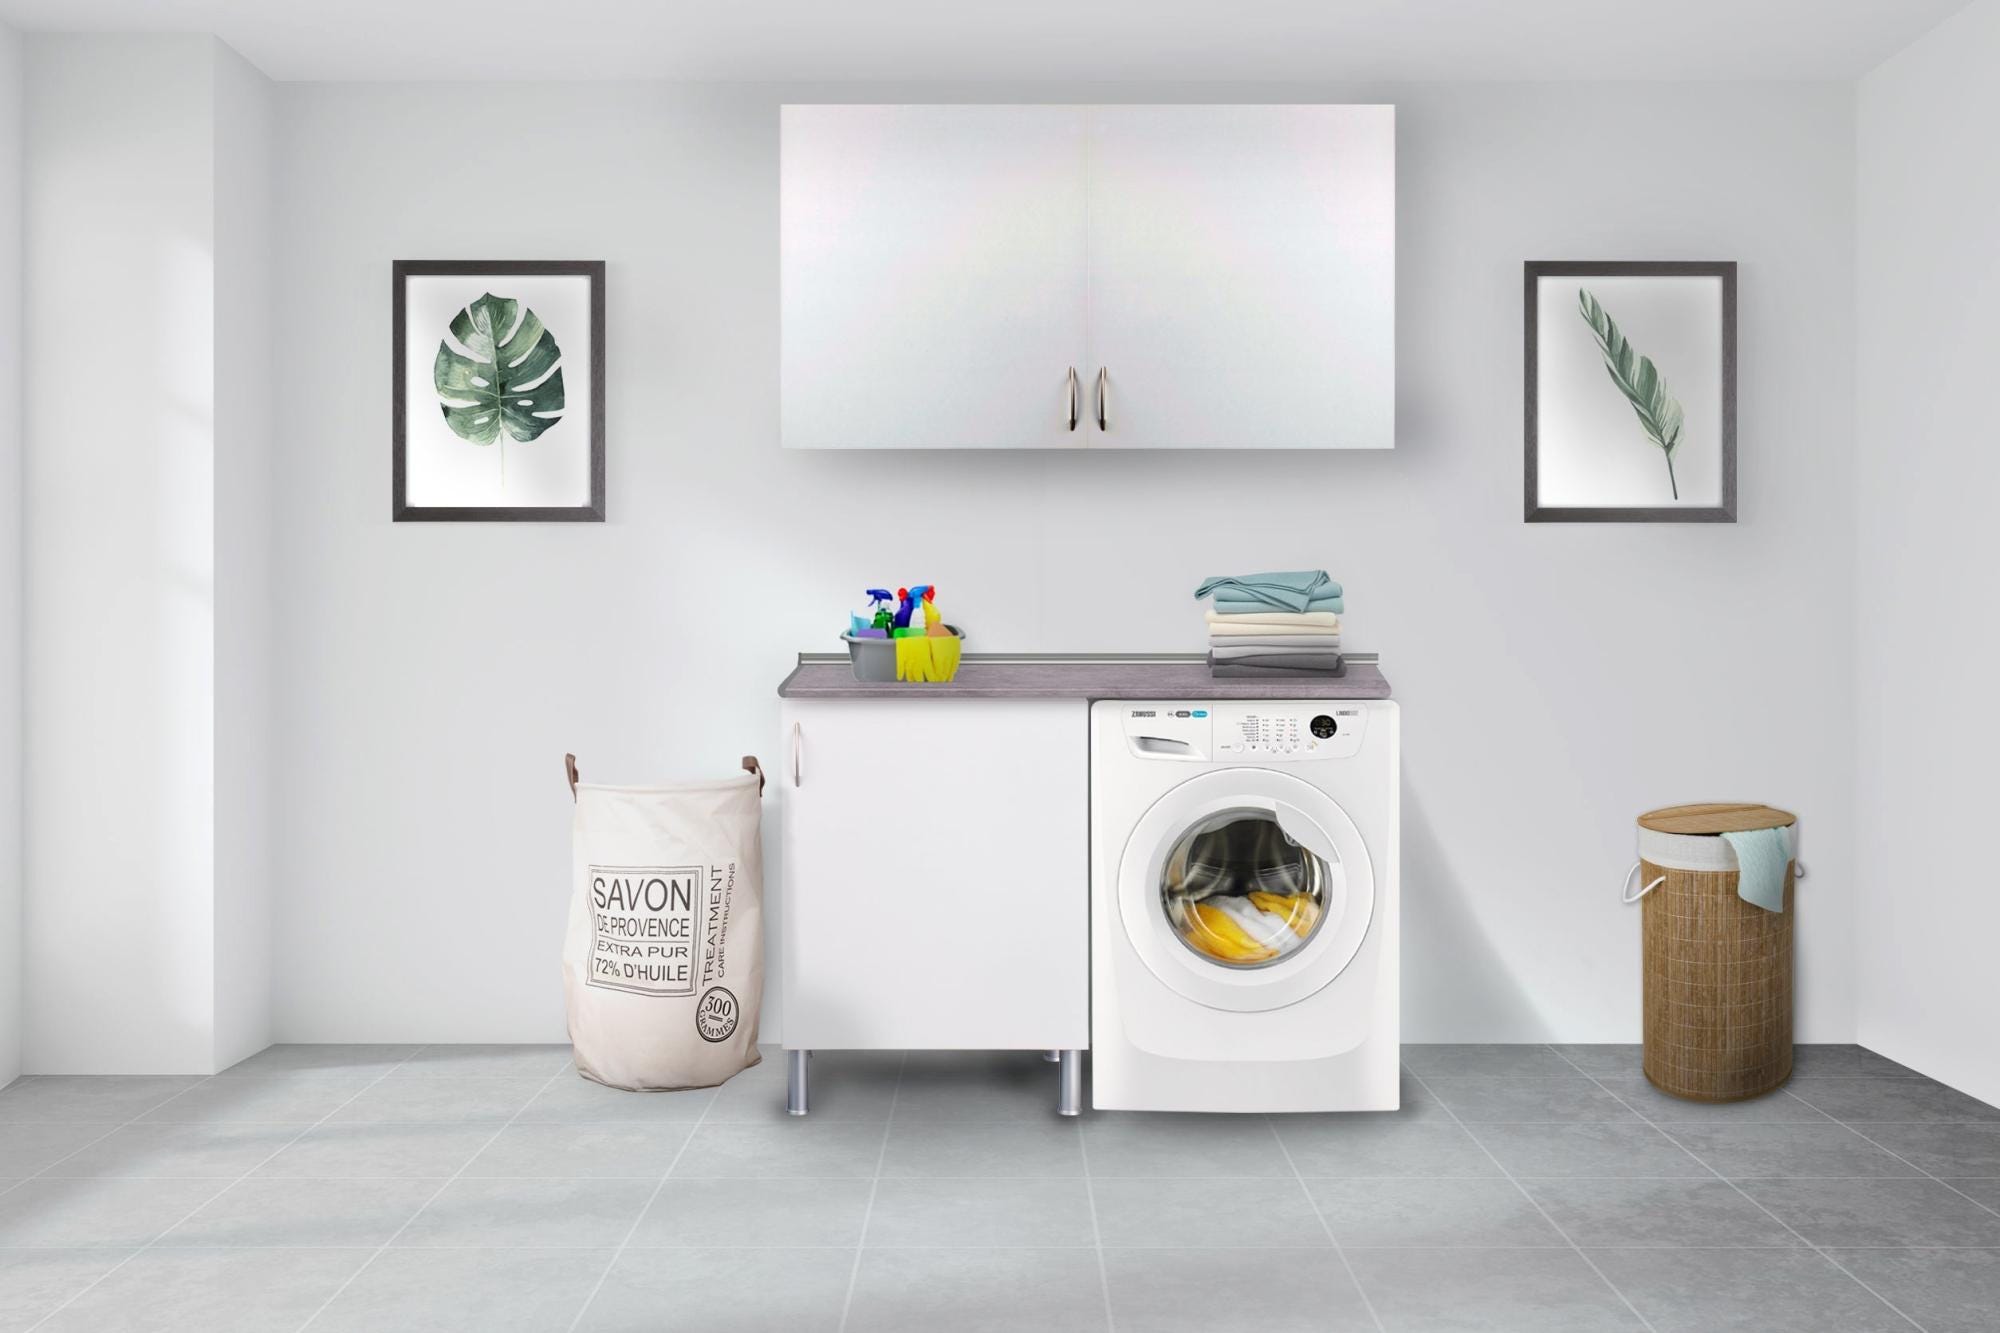 Mueble para lavadora BASIC de 70 x 60 cm blanco con módulo alto +